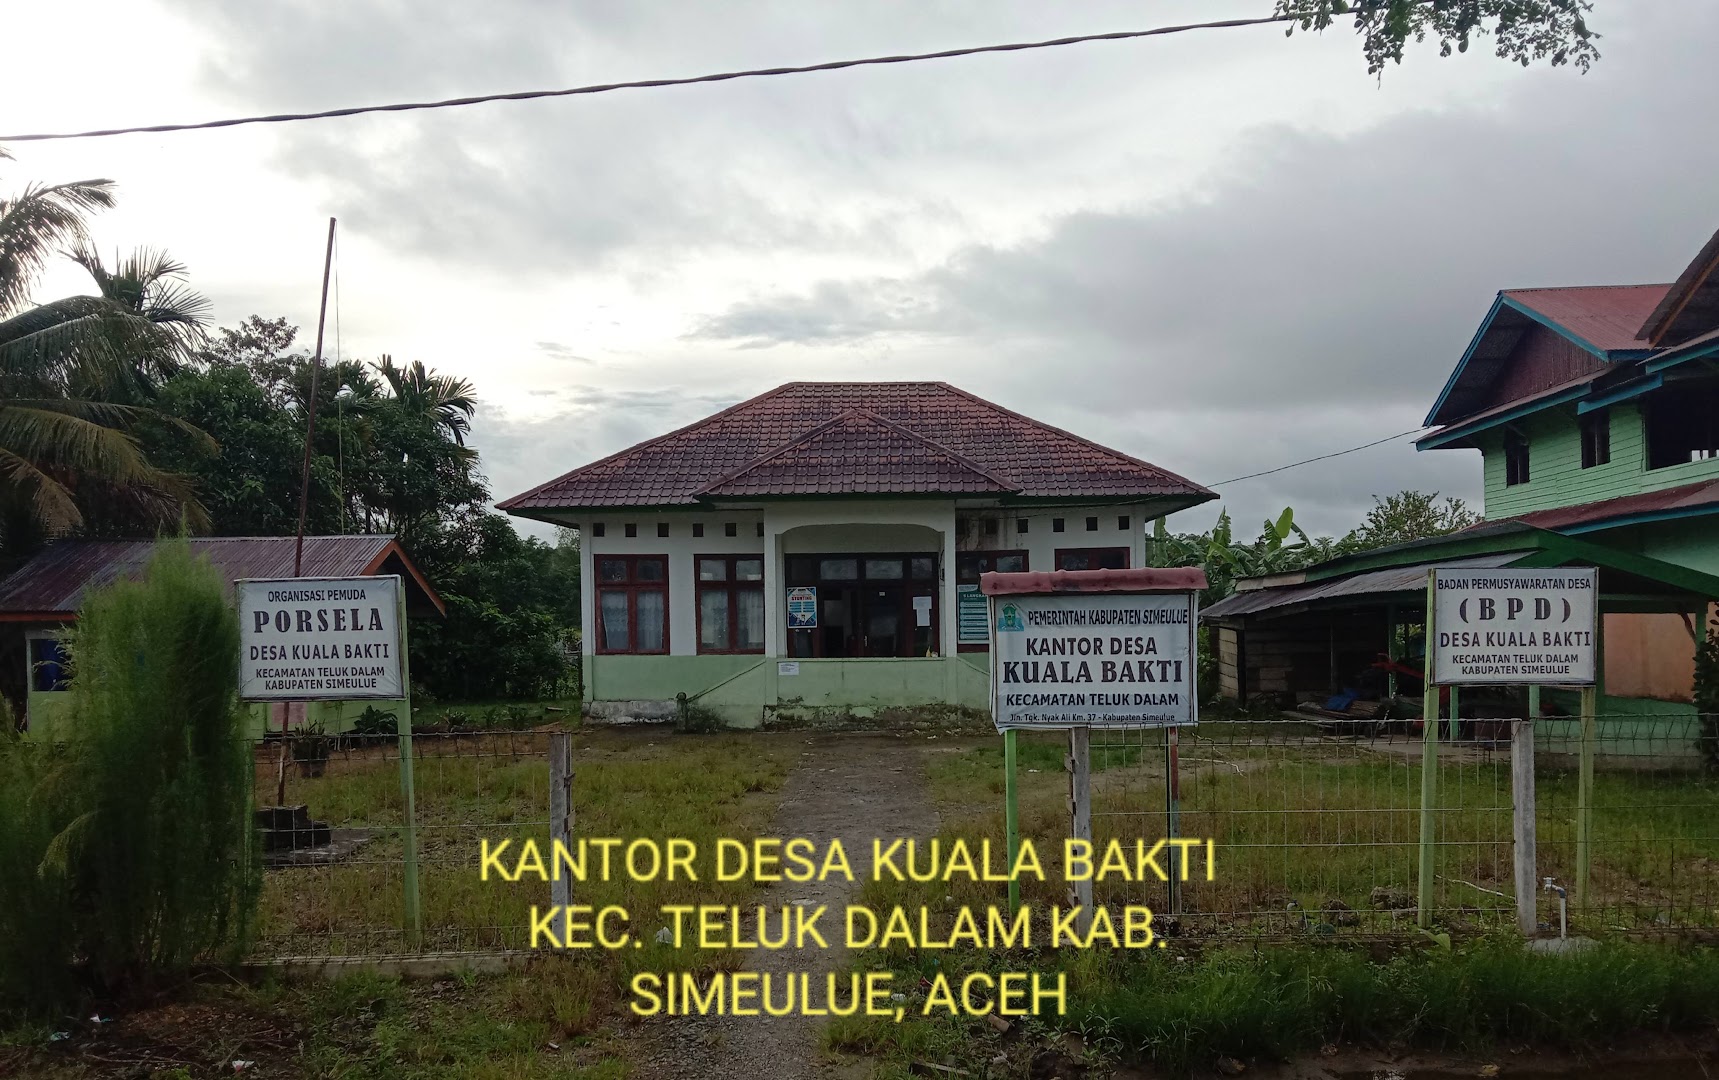 Kantor Desa Kuala Bakti Kec. Teluk Dalam Kab. Simeulue, Aceh Photo